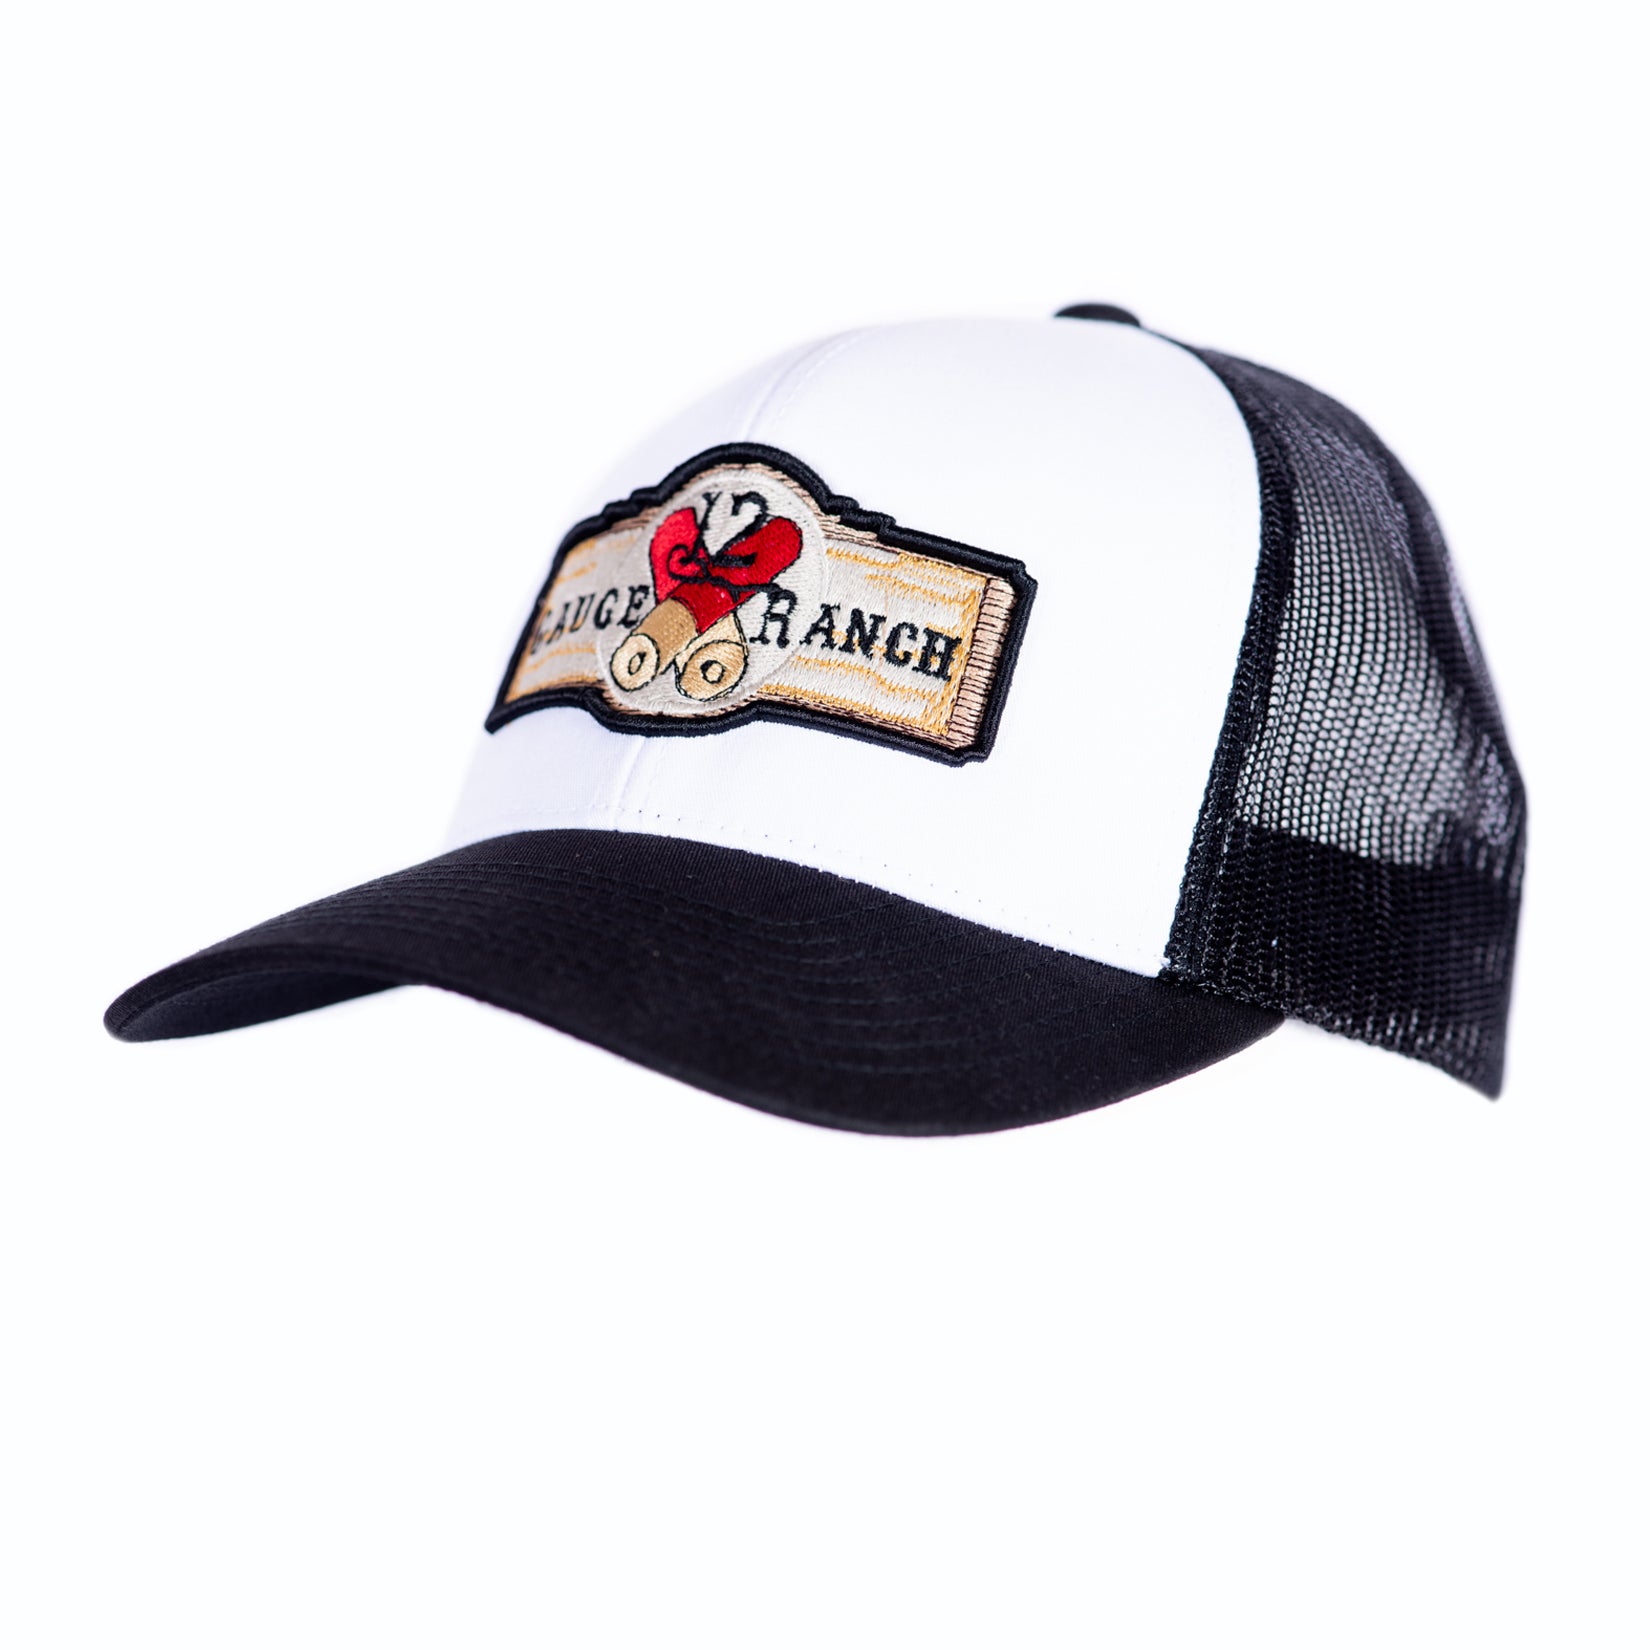 12 Gauge Ranch Baseball Hat White and Black (BBH104WB), Hats, 12 Gauge Ranch, 12 Gauge Ranch Ranch  12 Gauge Ranch